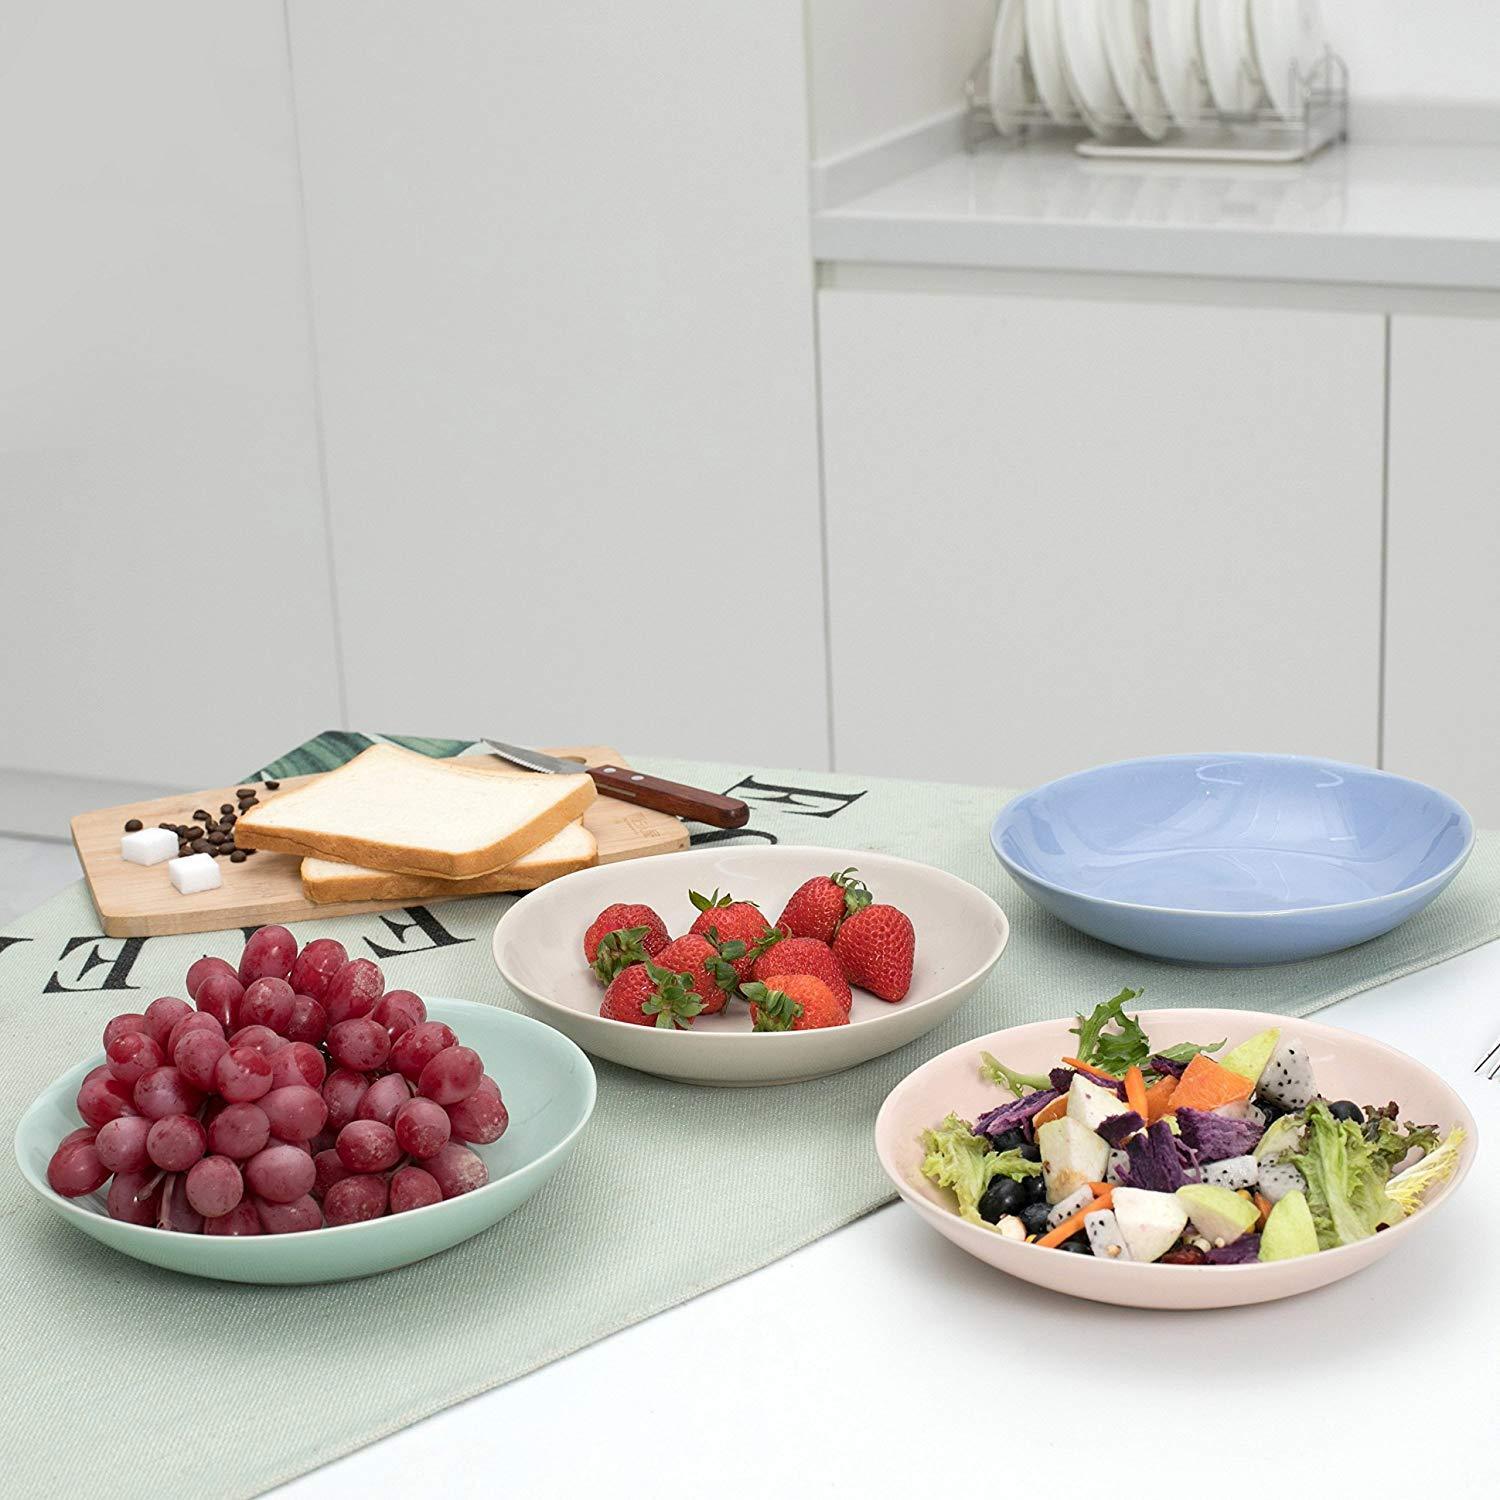 4-Pieces 8" Oval Porcelain Ceramic Dinner Soup Plates  (21.5*21.5*4.5cm) - Nordic Side - 21521545, Bowls, Ceramic, cm, Dessert, Dinner, Dishes, Fruit, Oval, Pieces, Plates, Porcelain, Salad, 